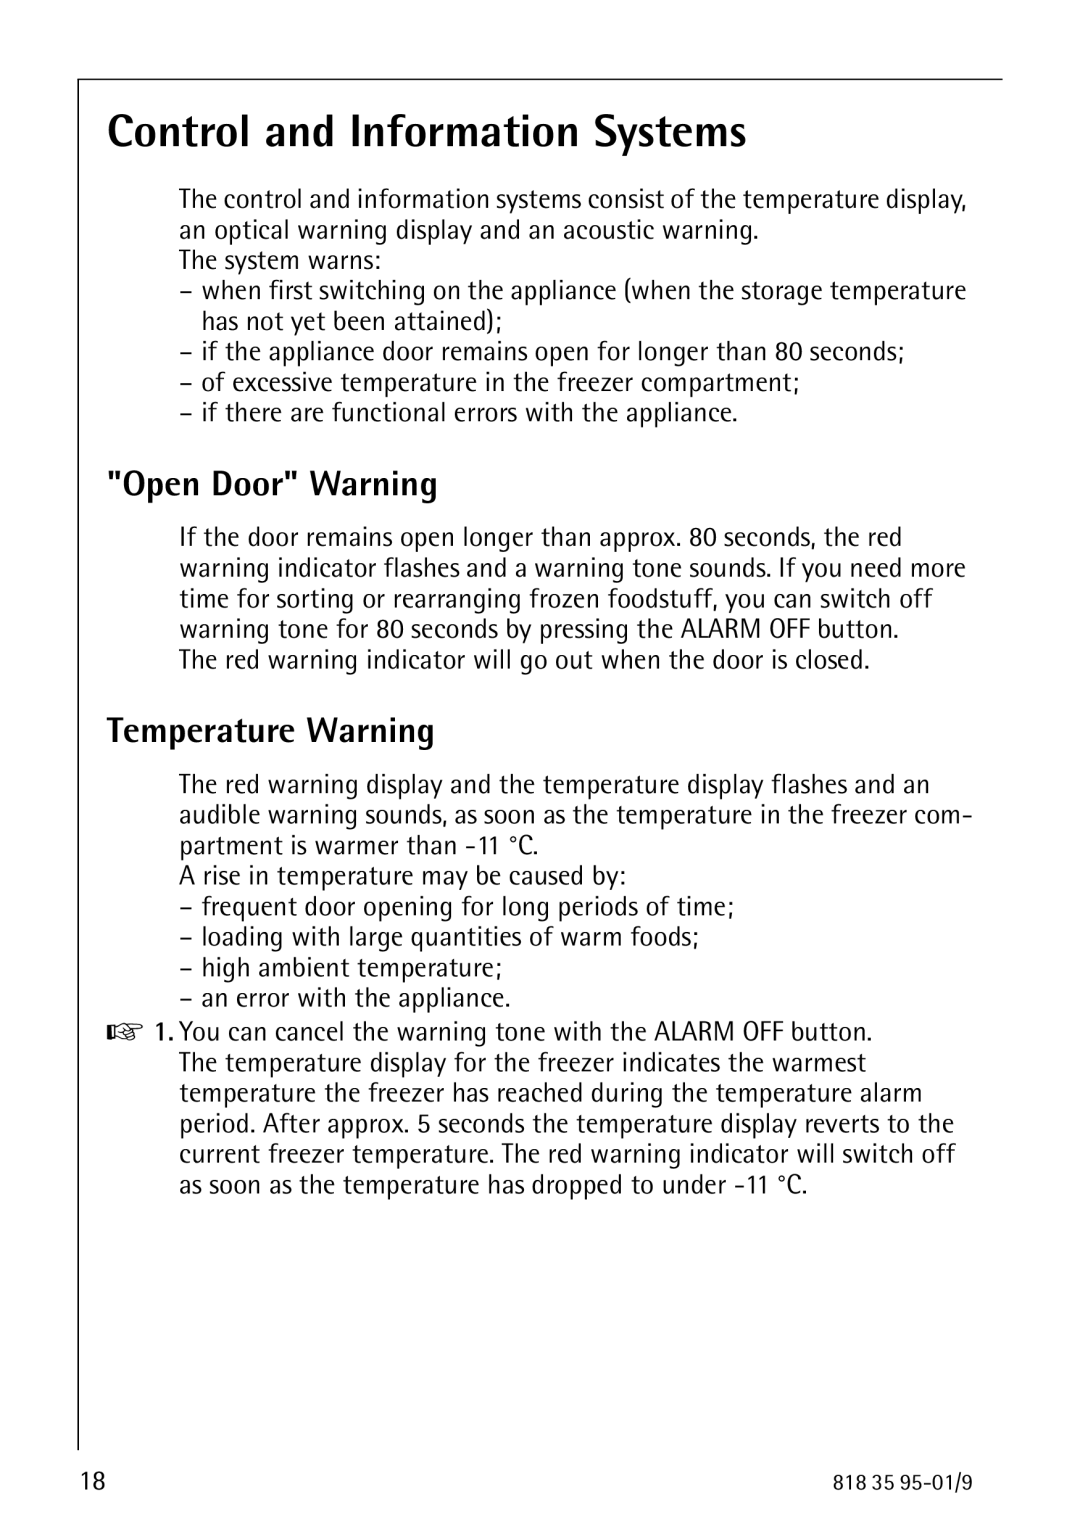 AEG 75248 GA1 manual Control and Information Systems, Open Door Warning, Temperature Warning 